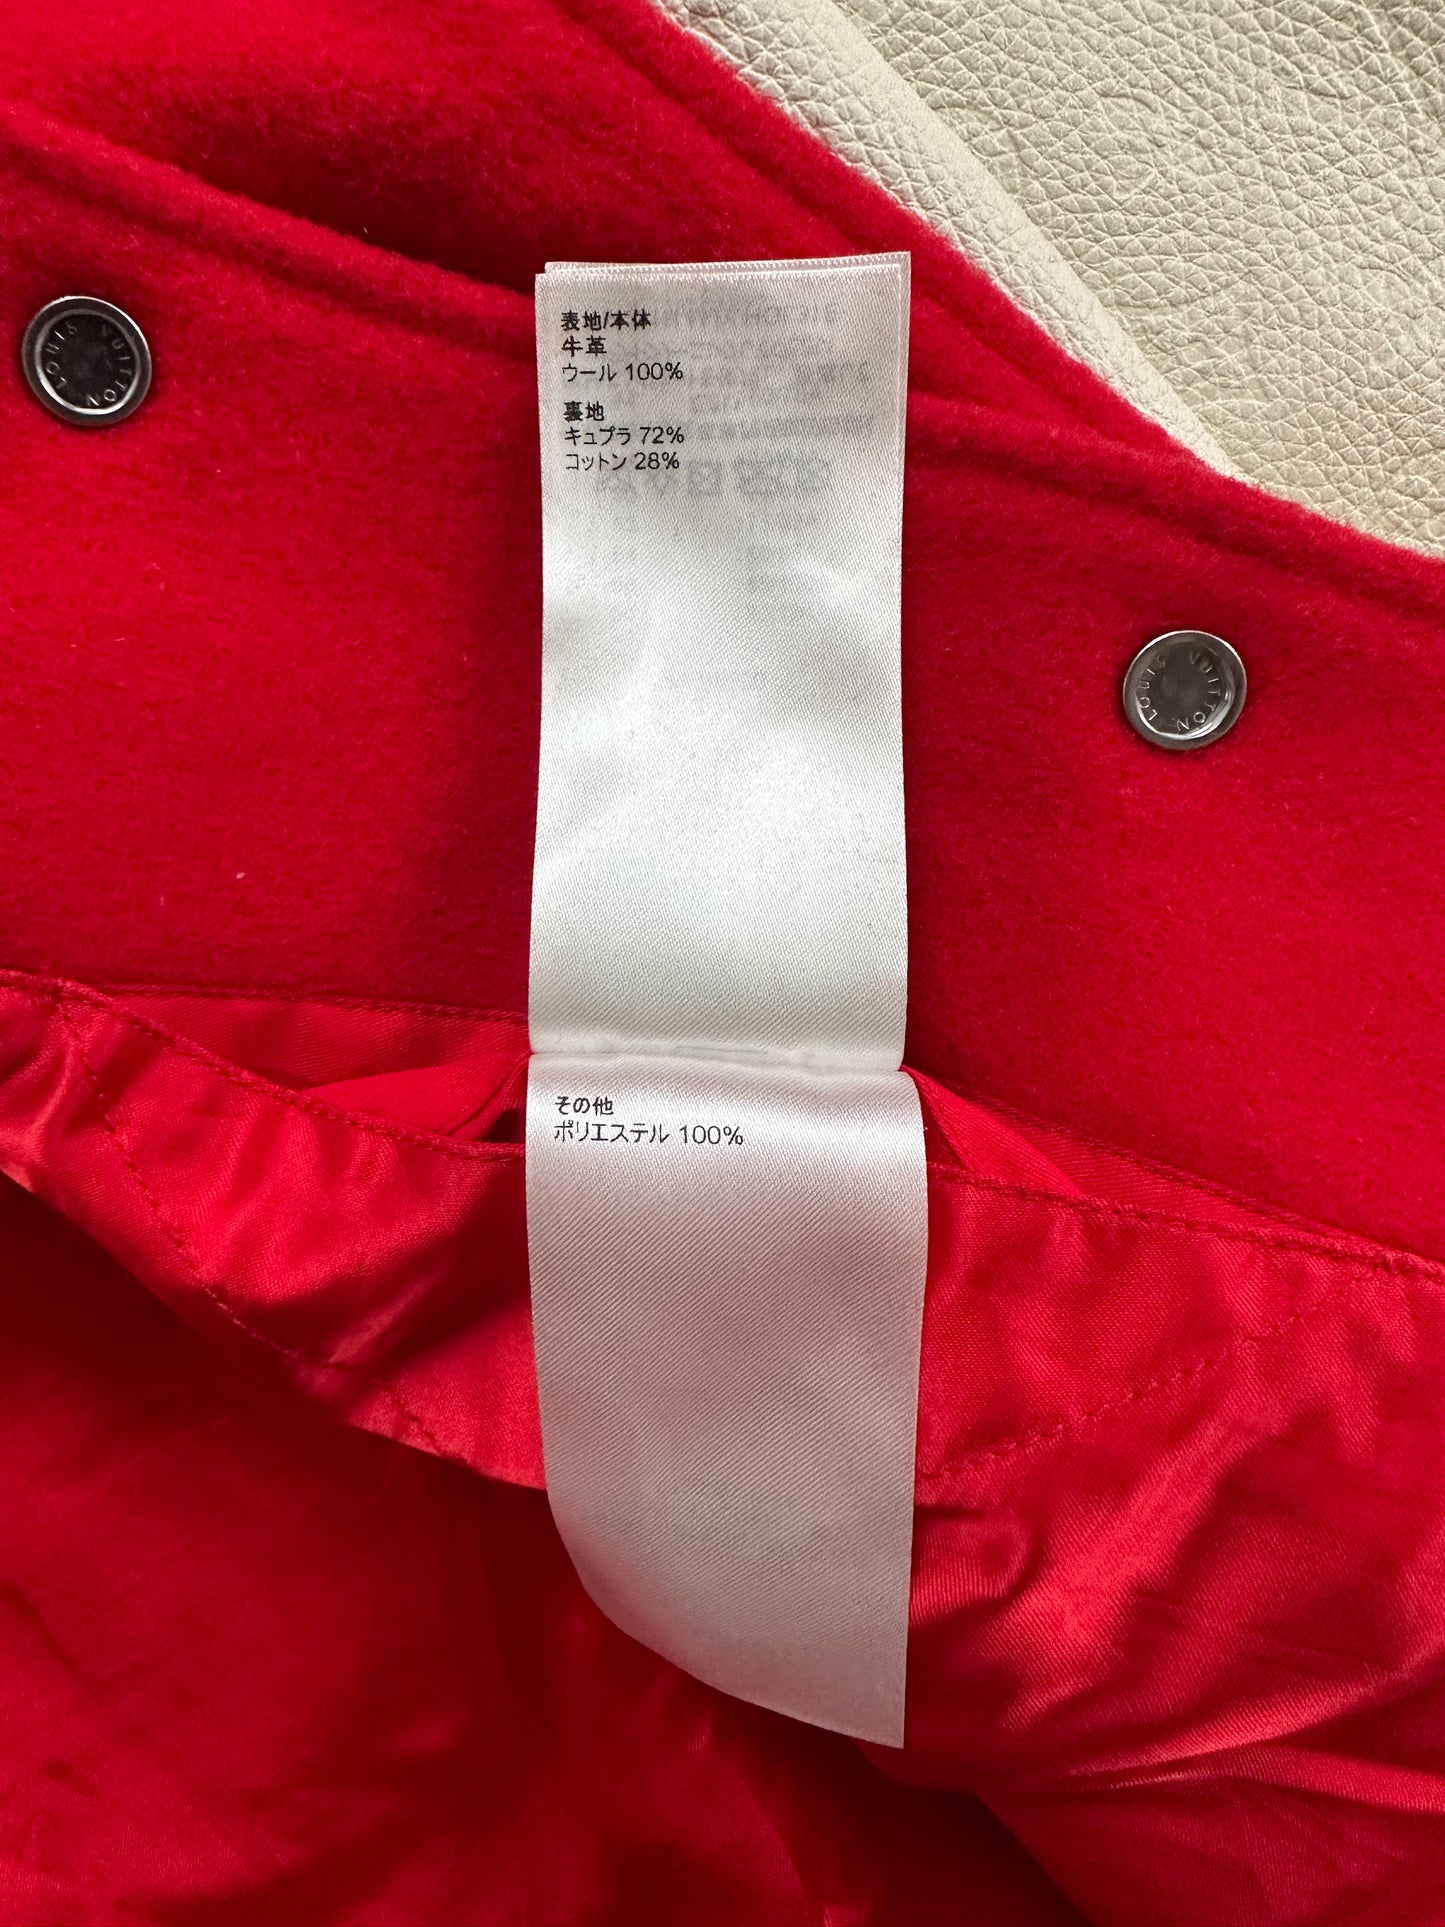 Louis Vuitton Yayoi Kusama Red & White Varsity Jacket